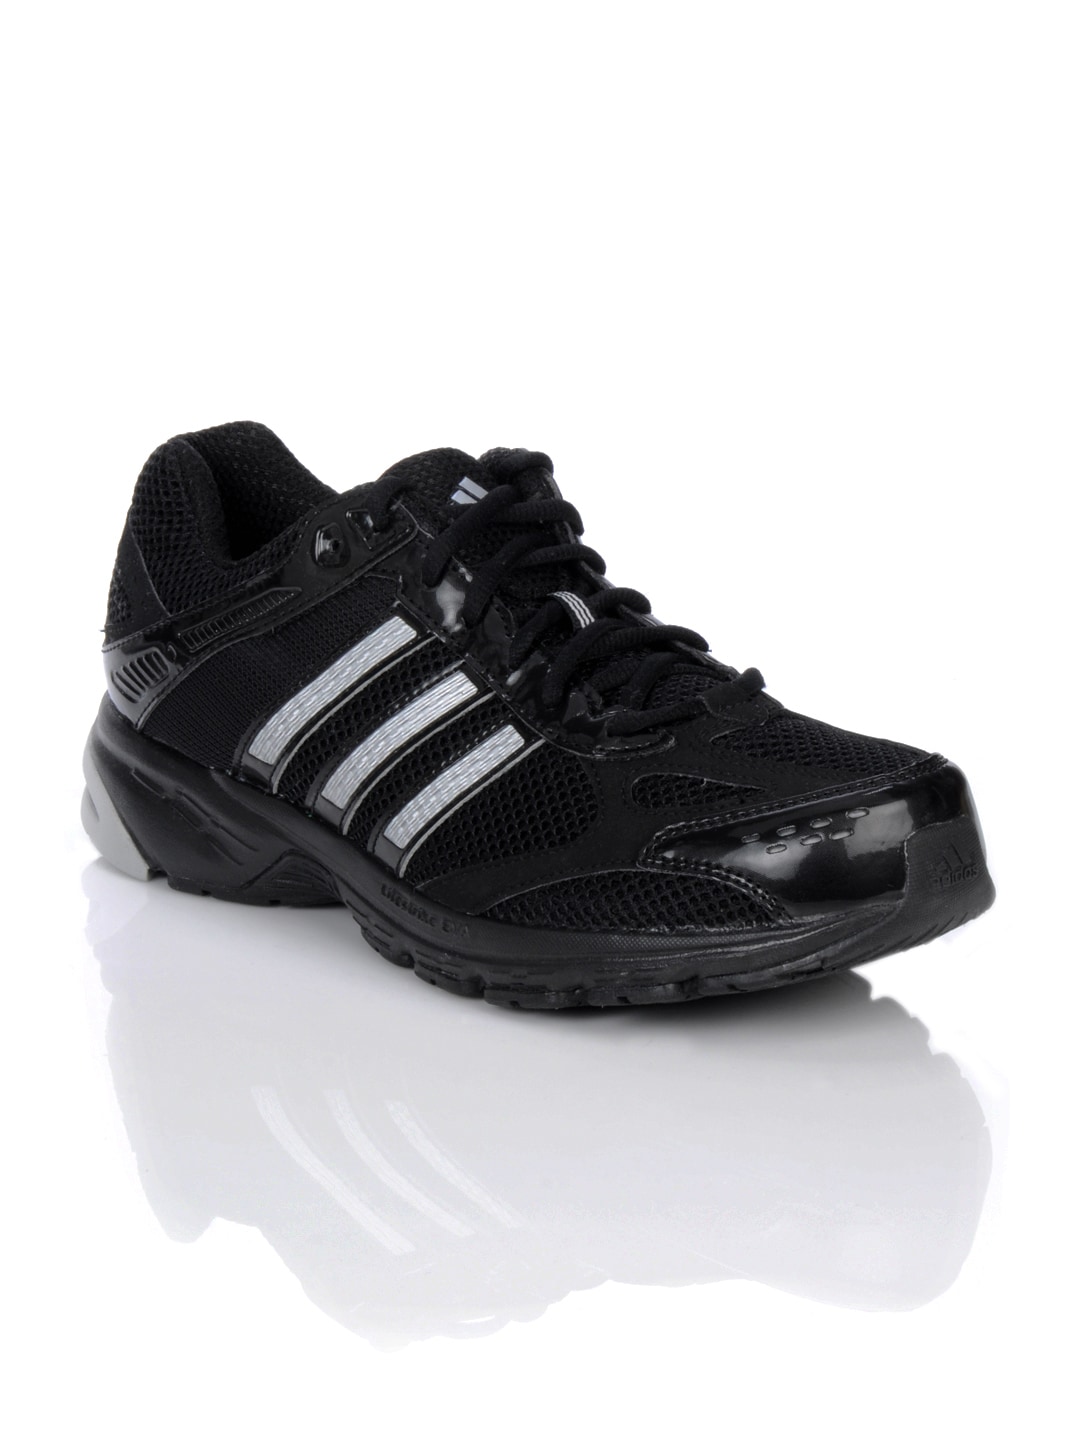 ADIDAS Men Duramo 4 M Black Sports Shoes